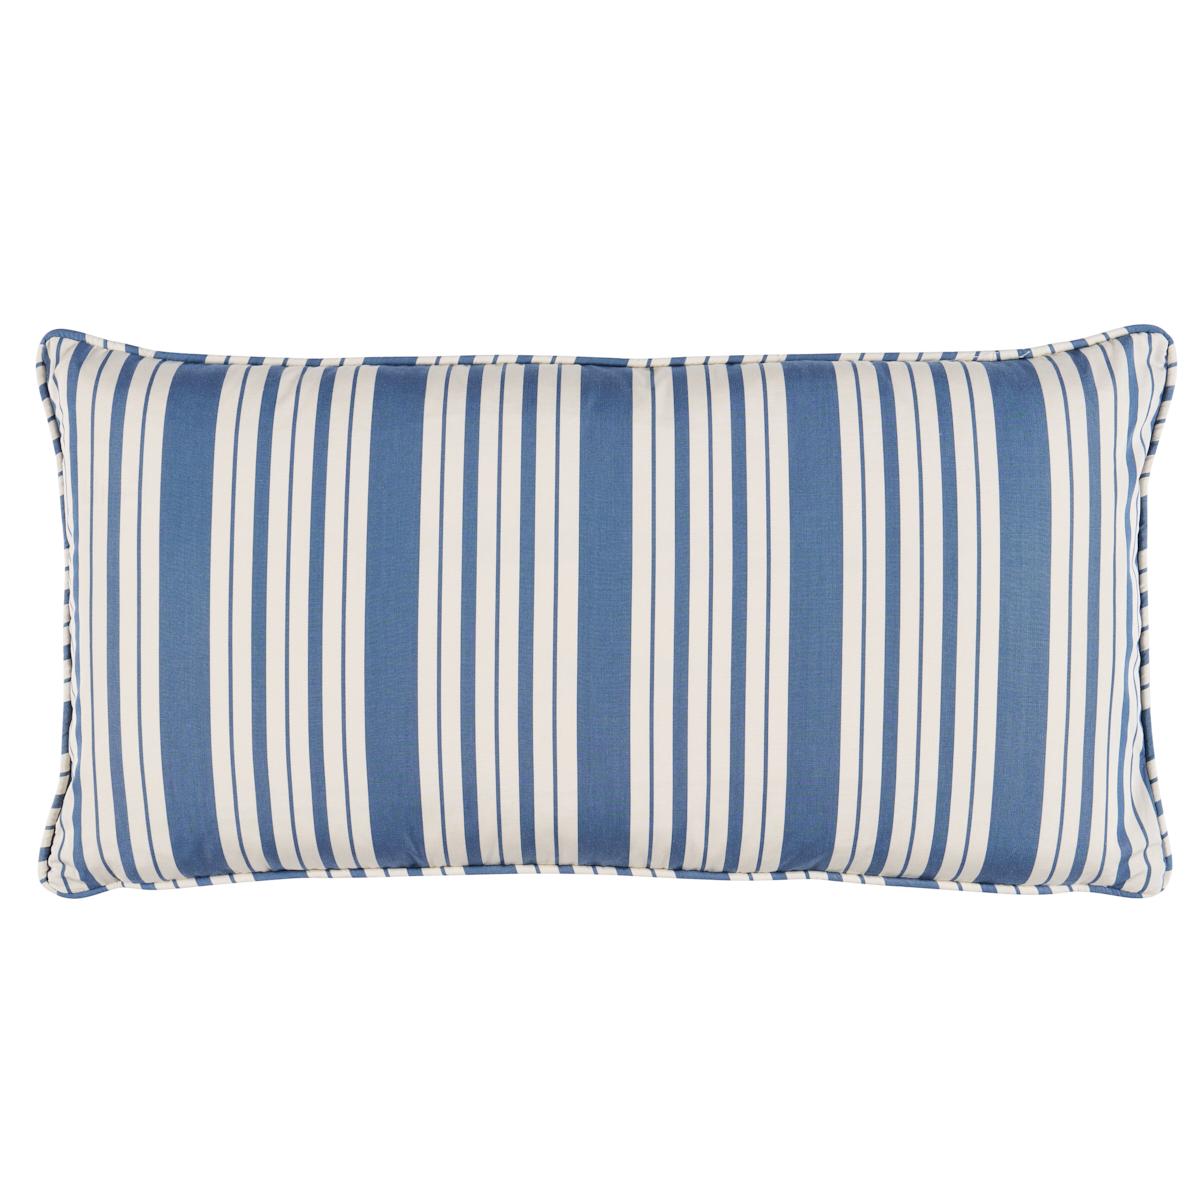 Markie Stripe Pillow in Indigo 24 x 12" For Sale